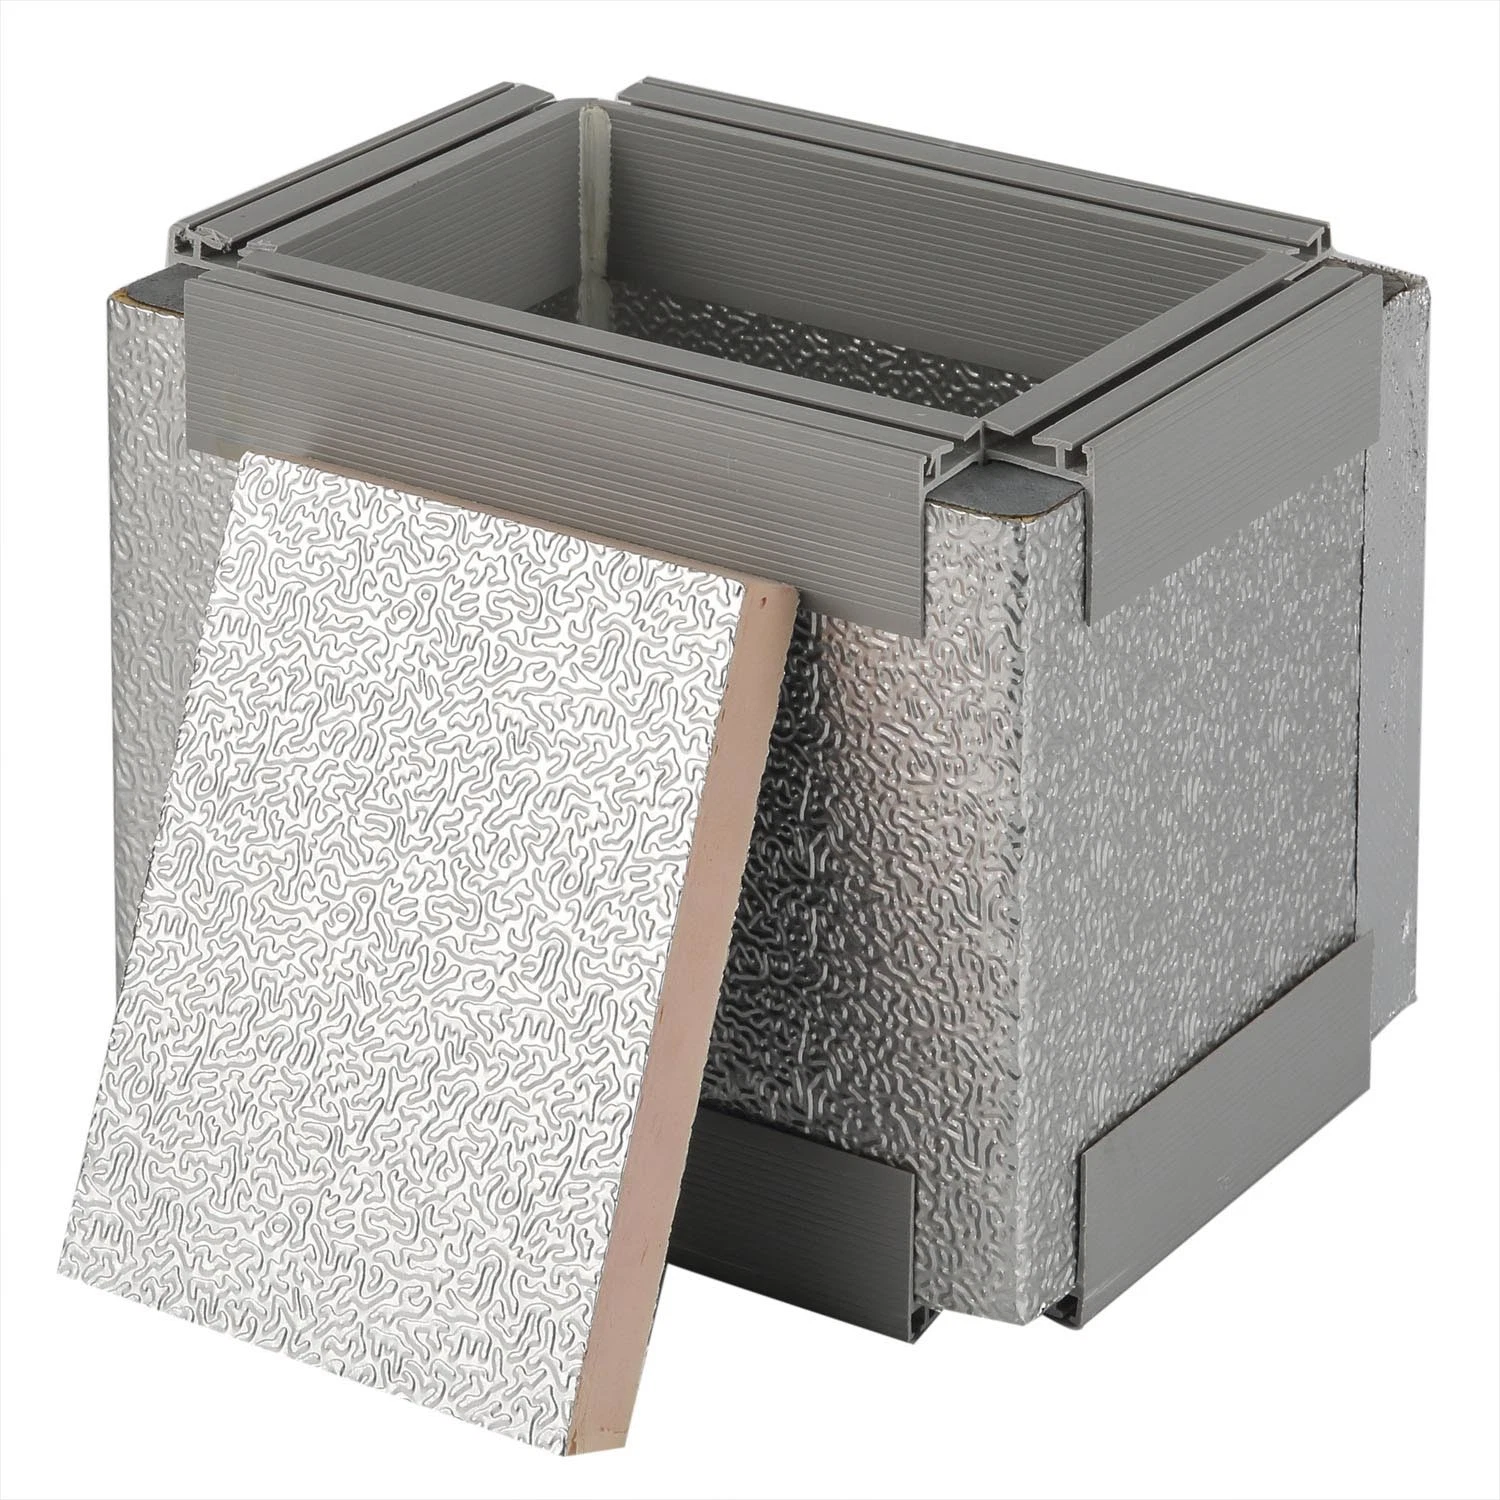 Phenolic Foam Insulation Panels Thermal Insulation Material